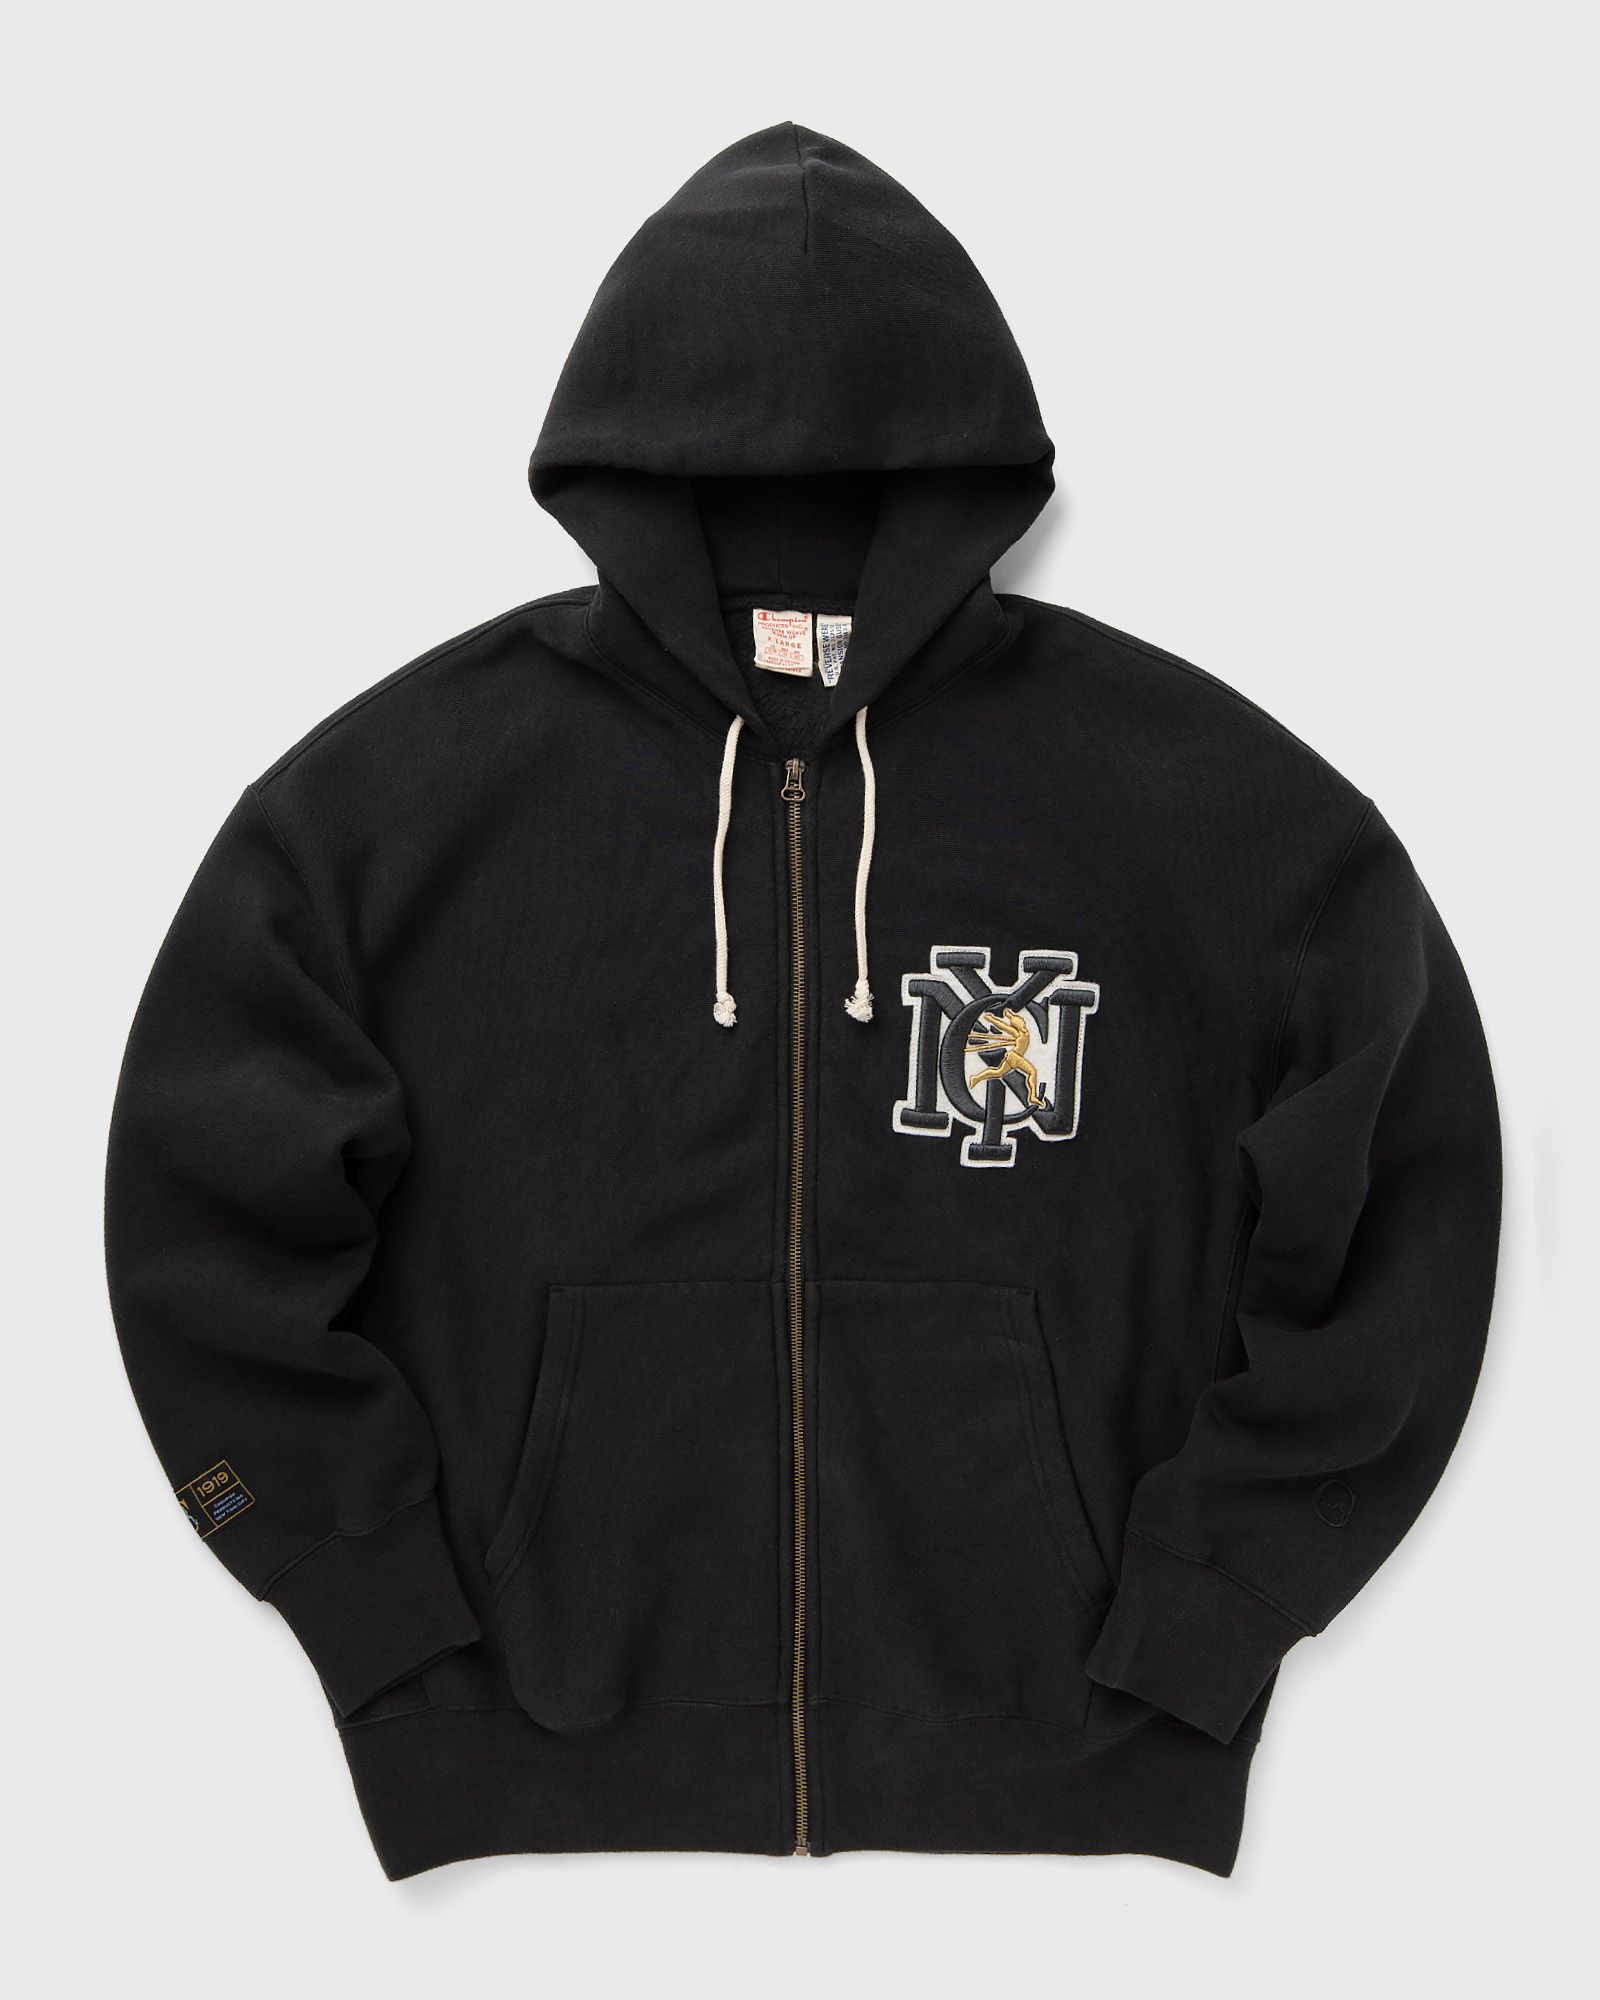 CHAMPION - hooded full zip sweatshirt men hoodies|zippers black in größe:xl